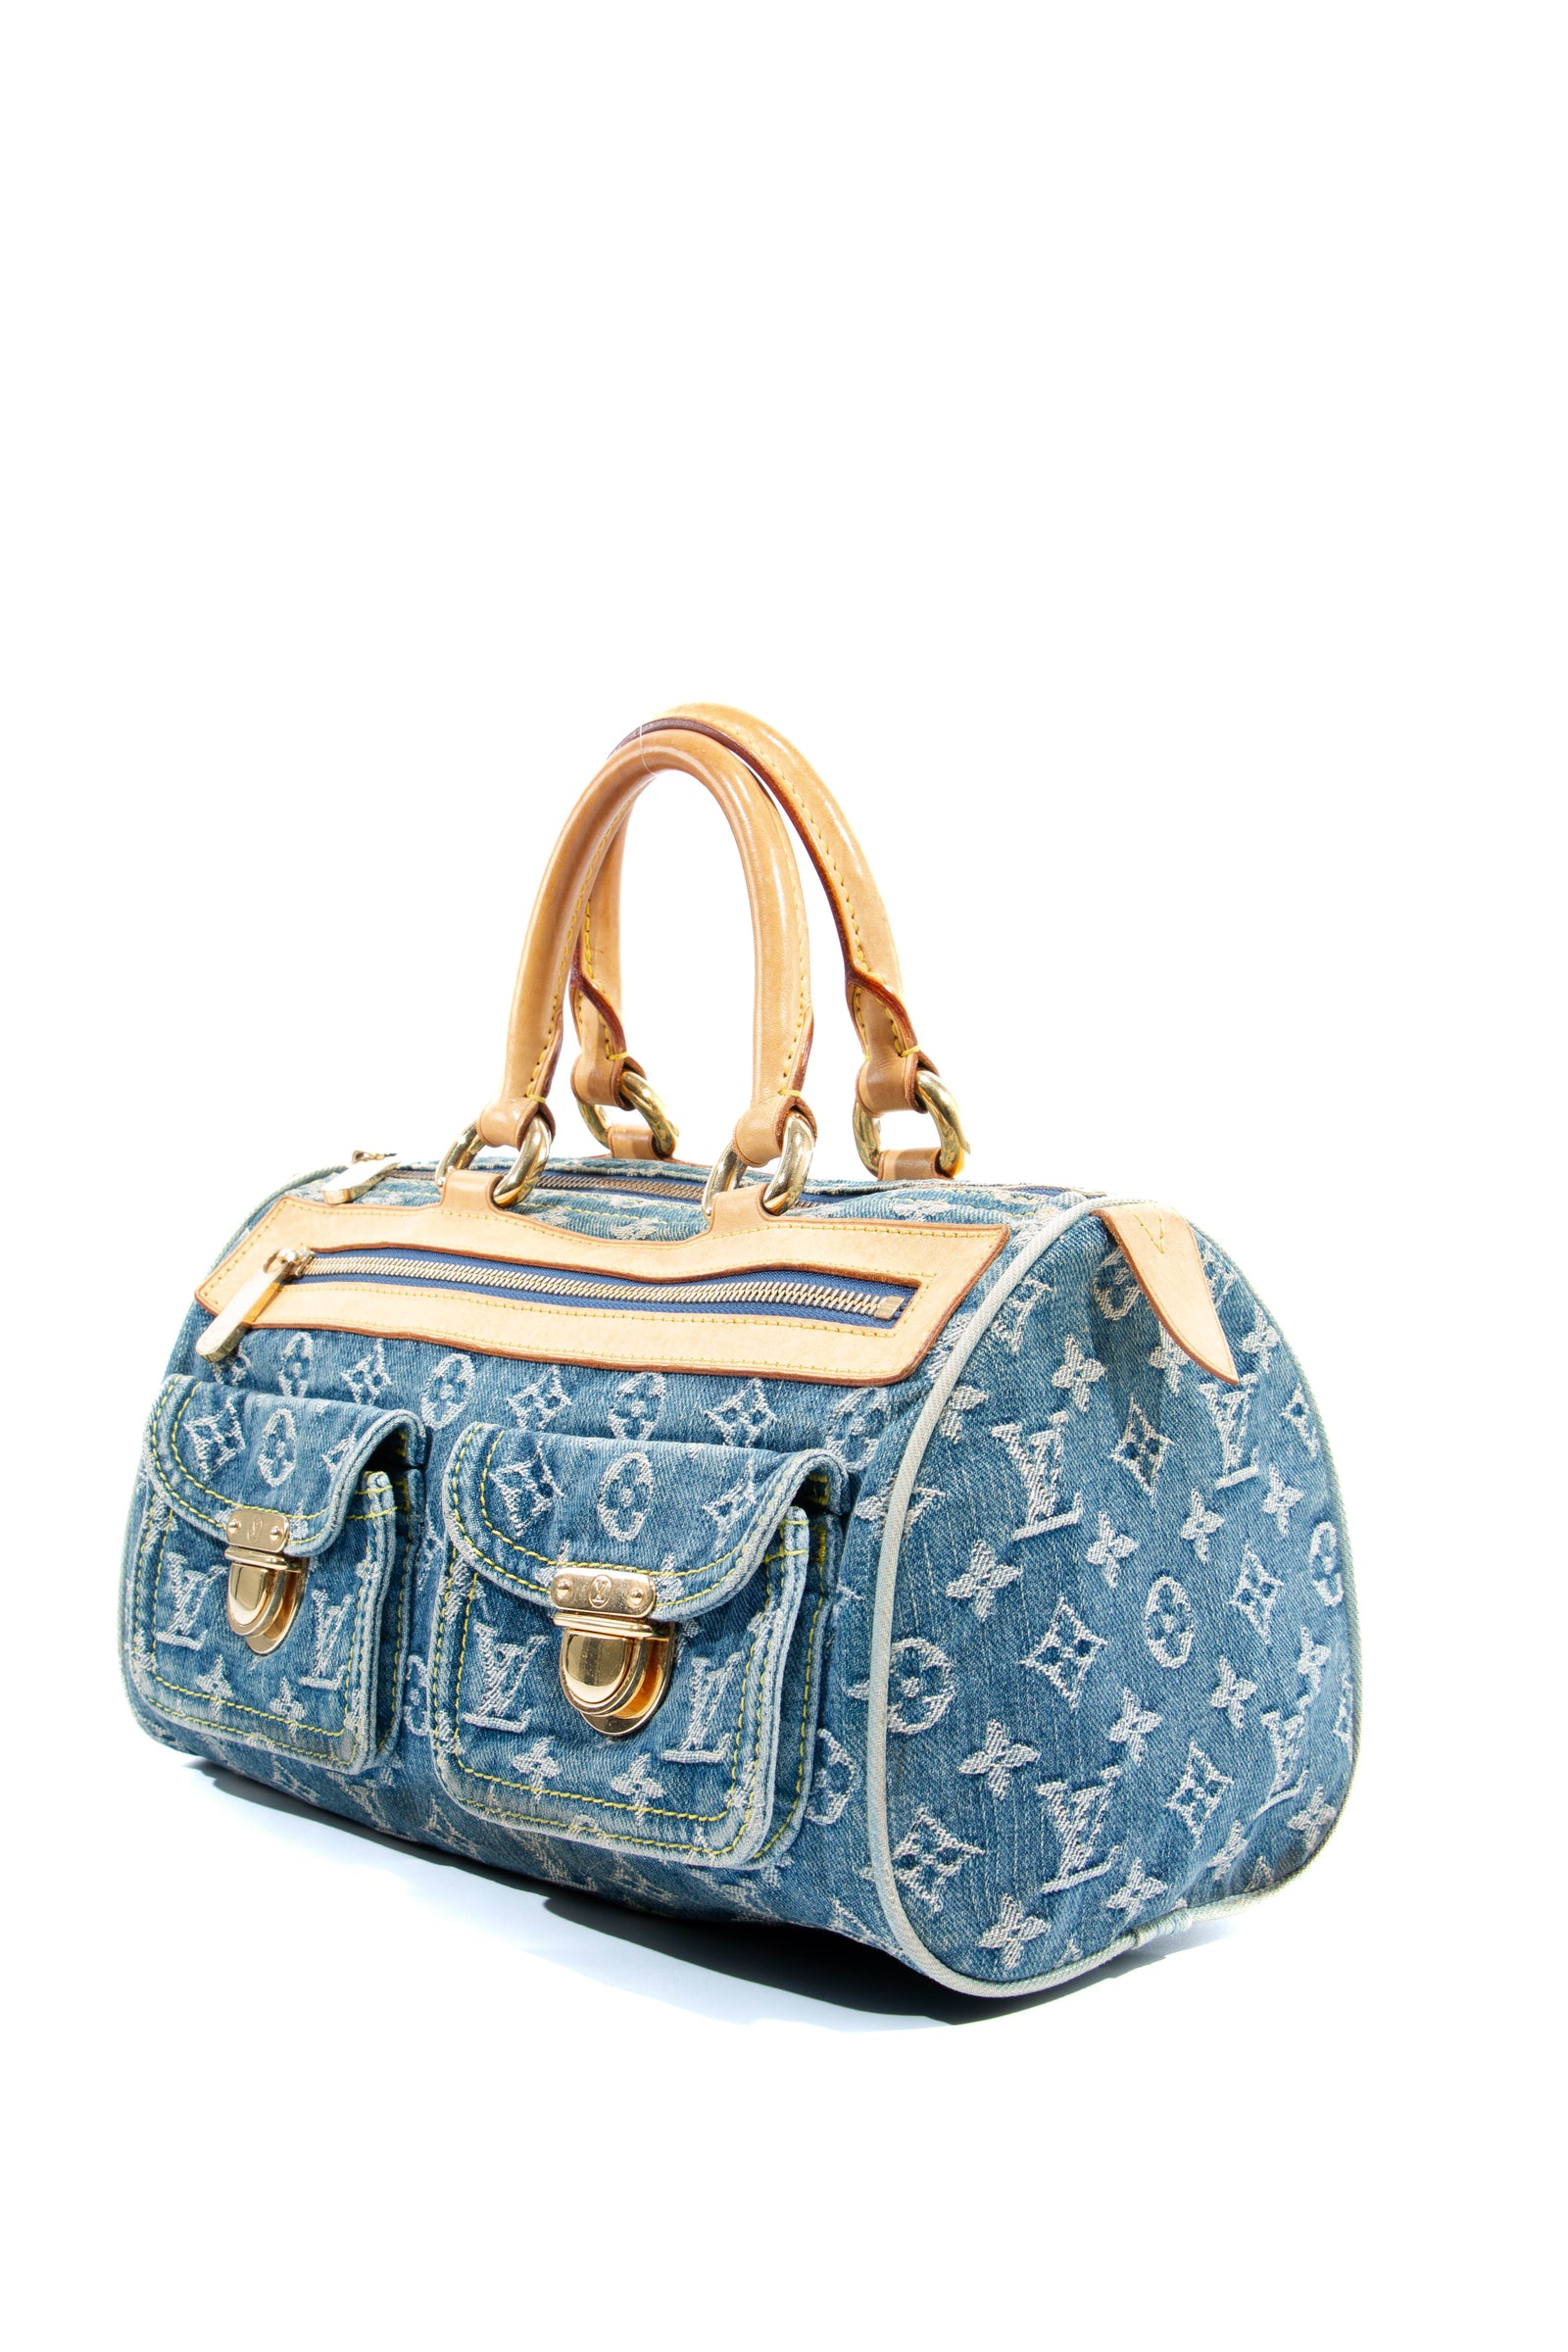 FWRD Renew Louis Vuitton Neo Speedy Monogram Denim Handbag in Medium Blue